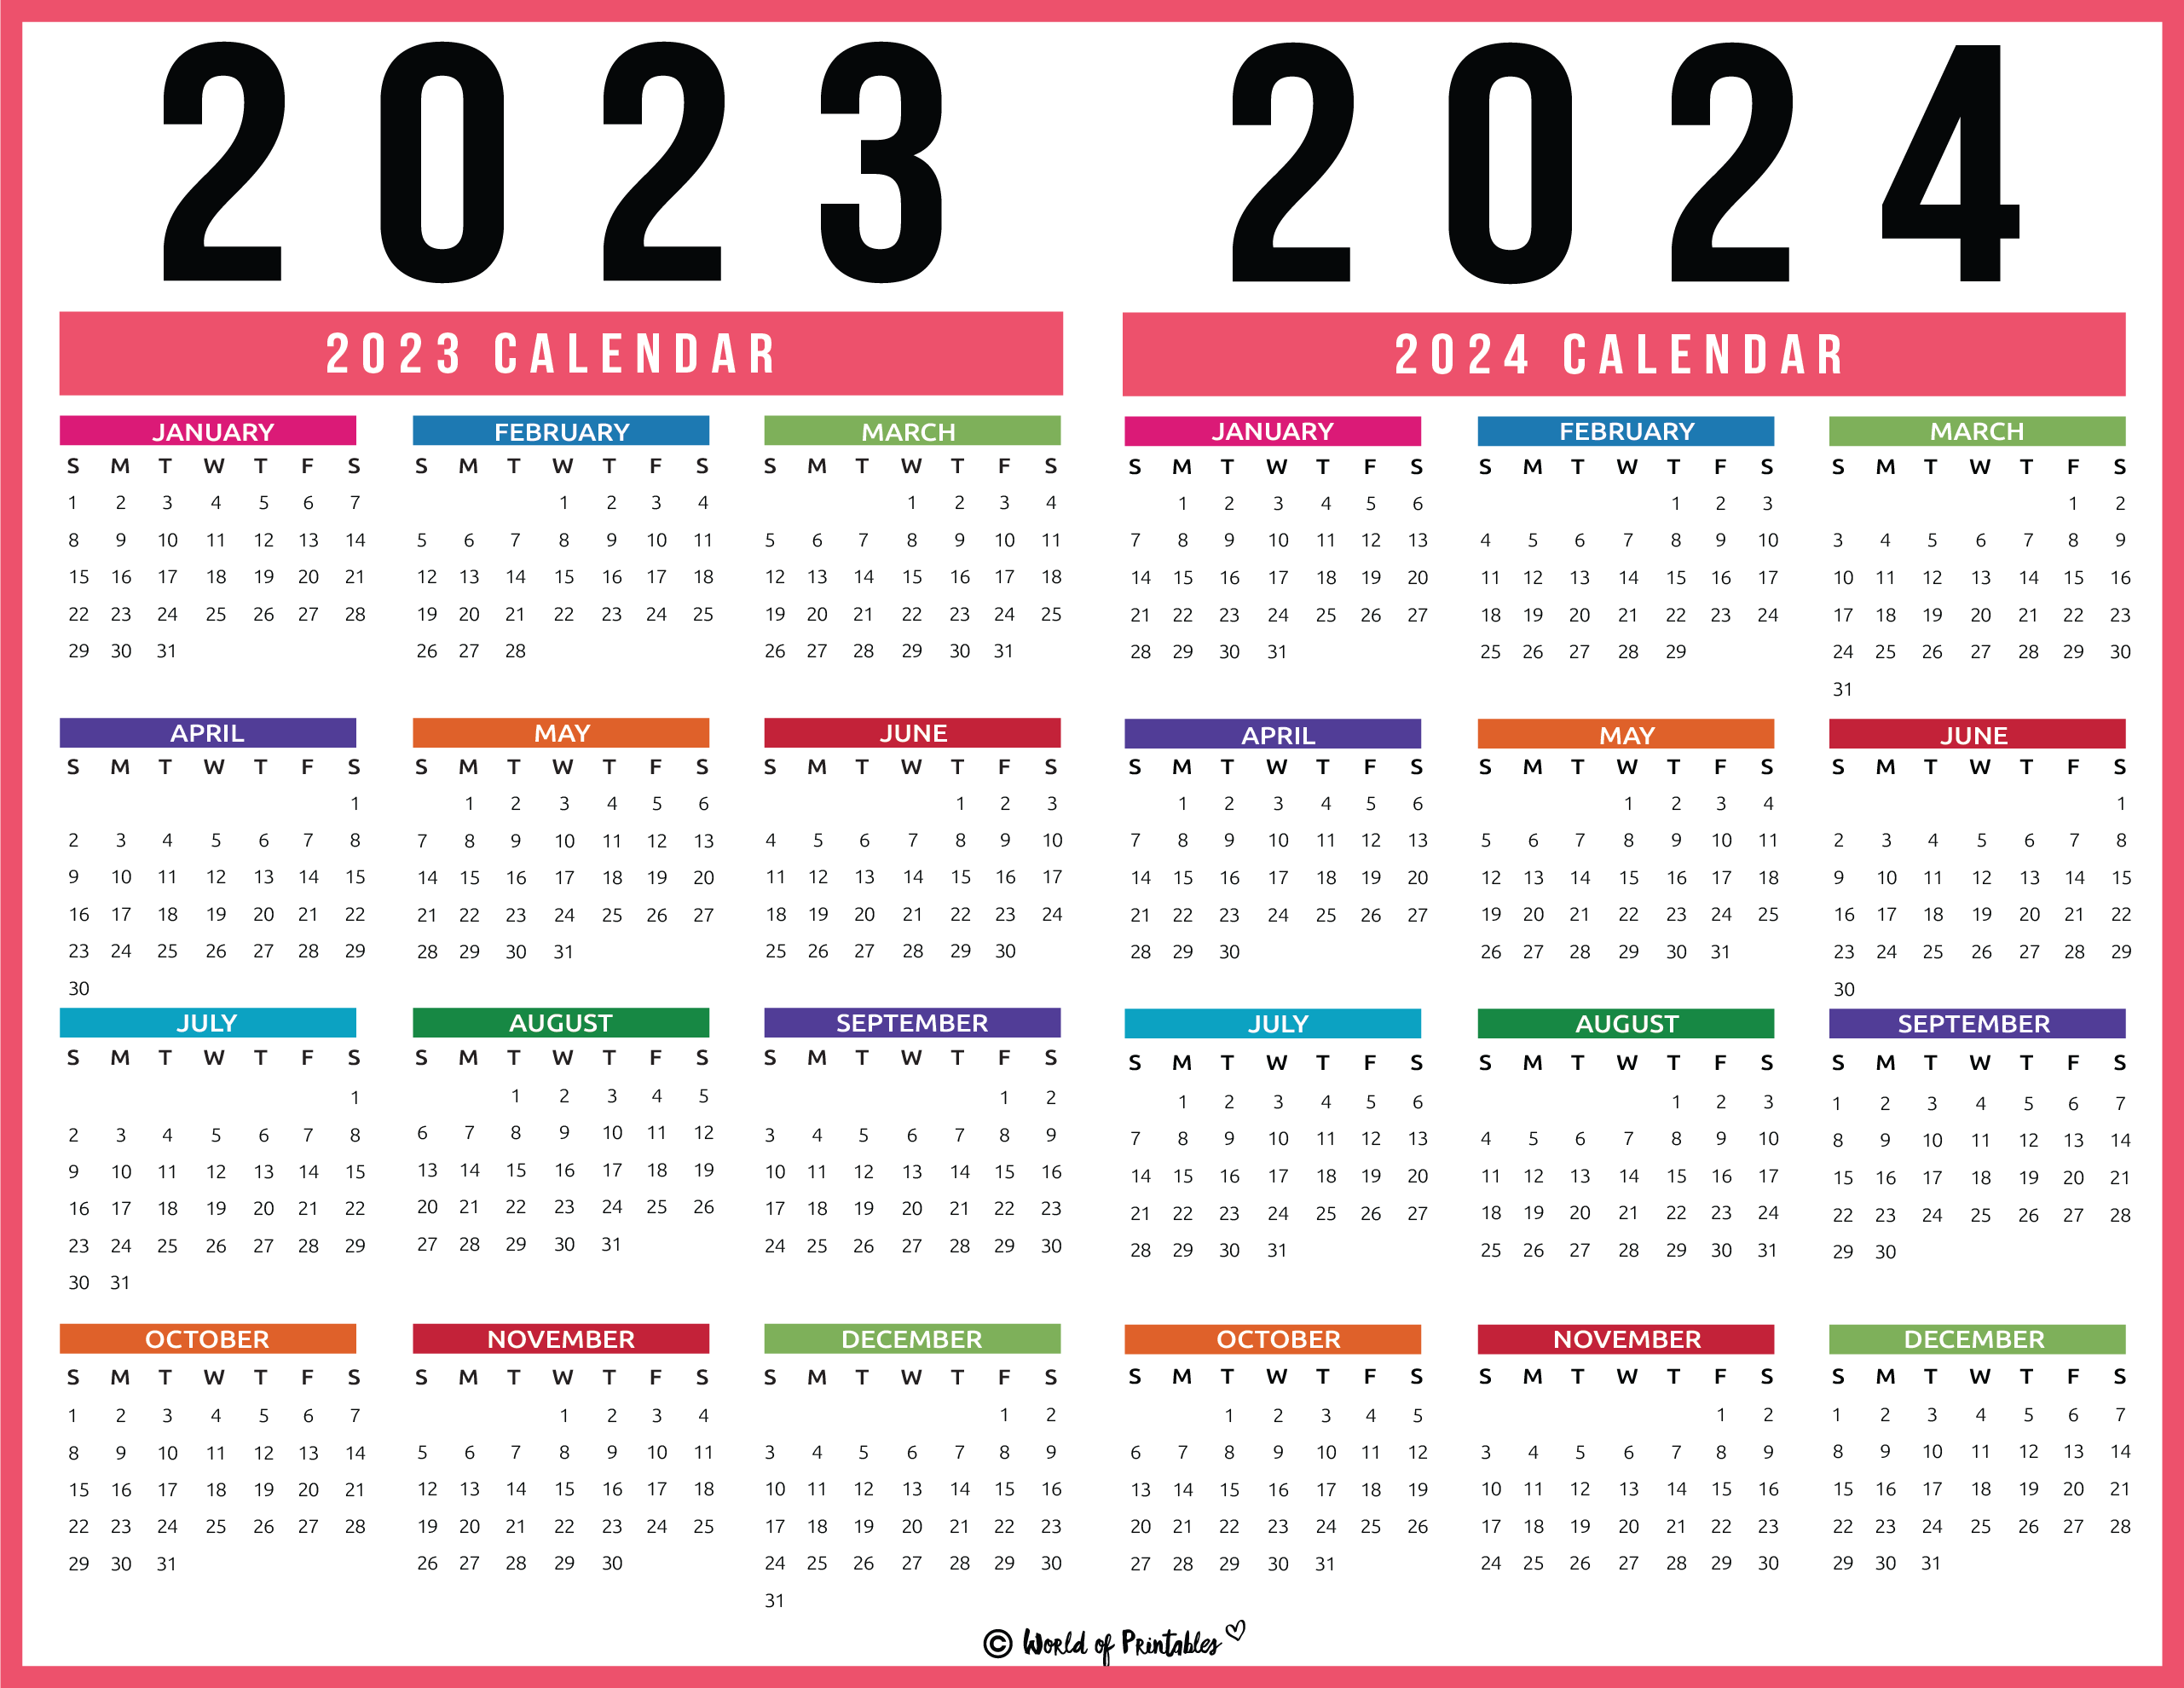 2023 2024 Calendar Free Printables - World Of Printables for 2023-2024 Calendar Printable